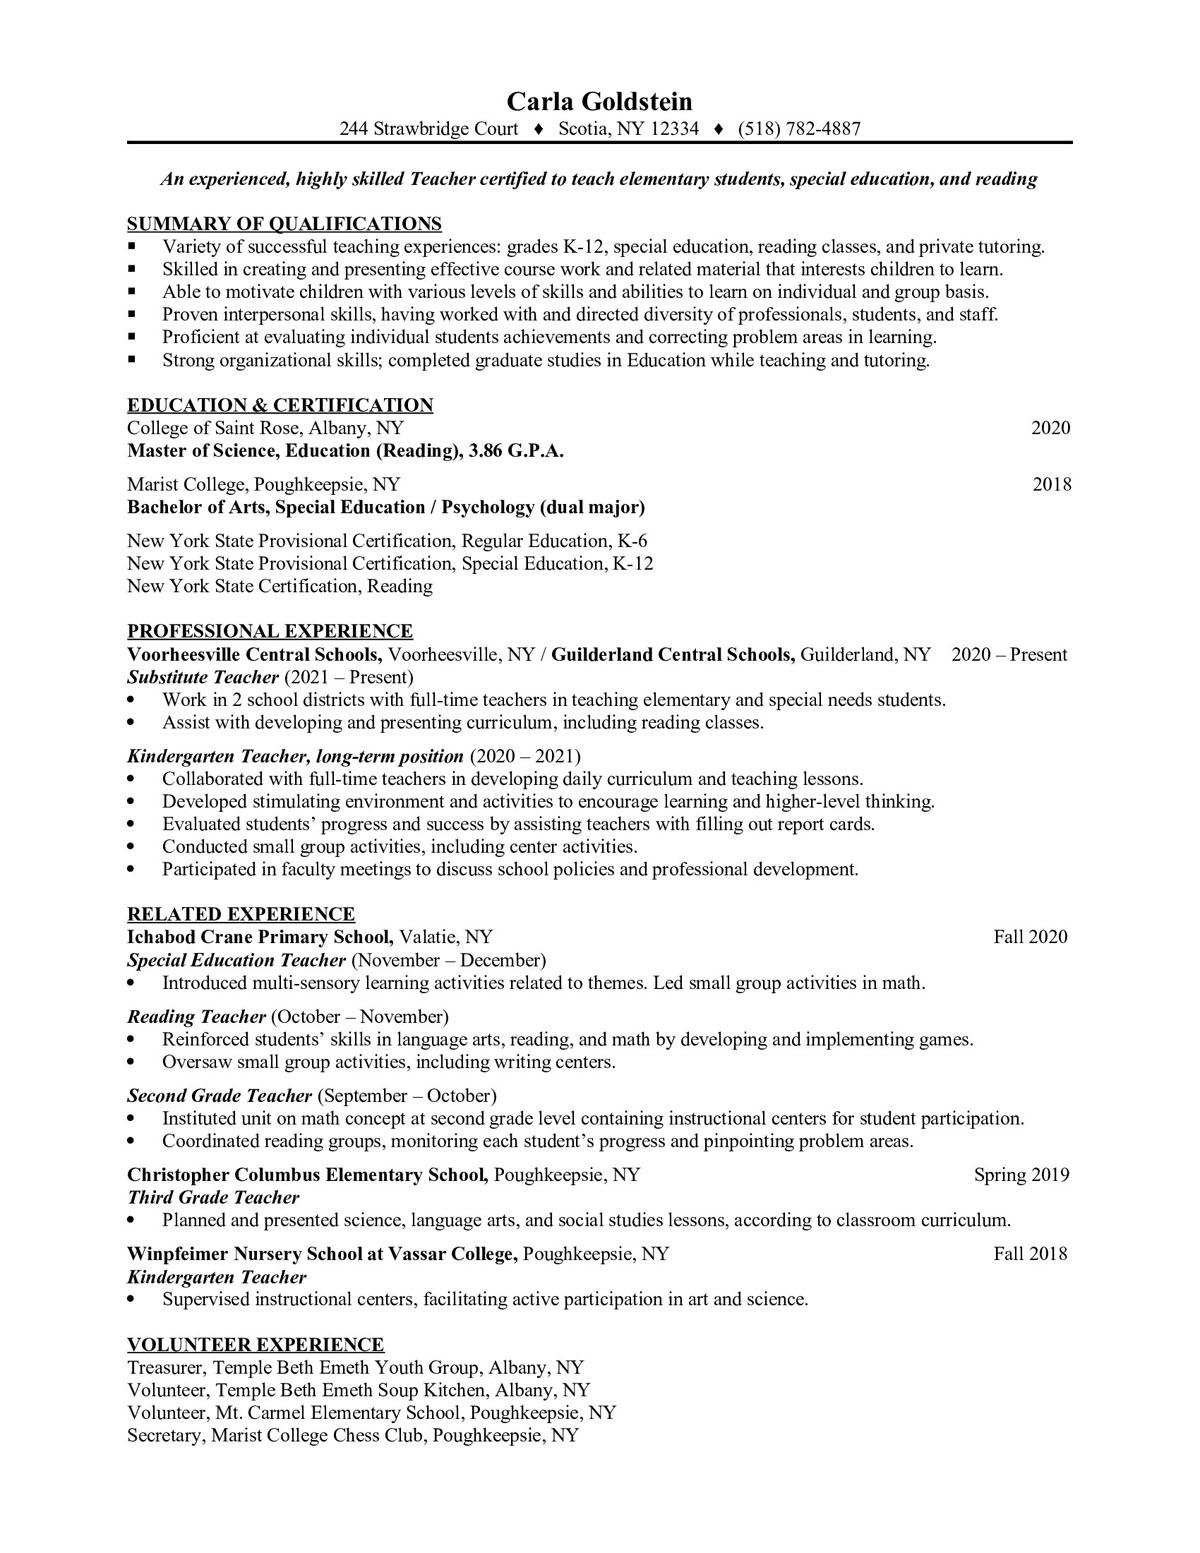 Sample resume: Elementary Education, High Experience, Chronological